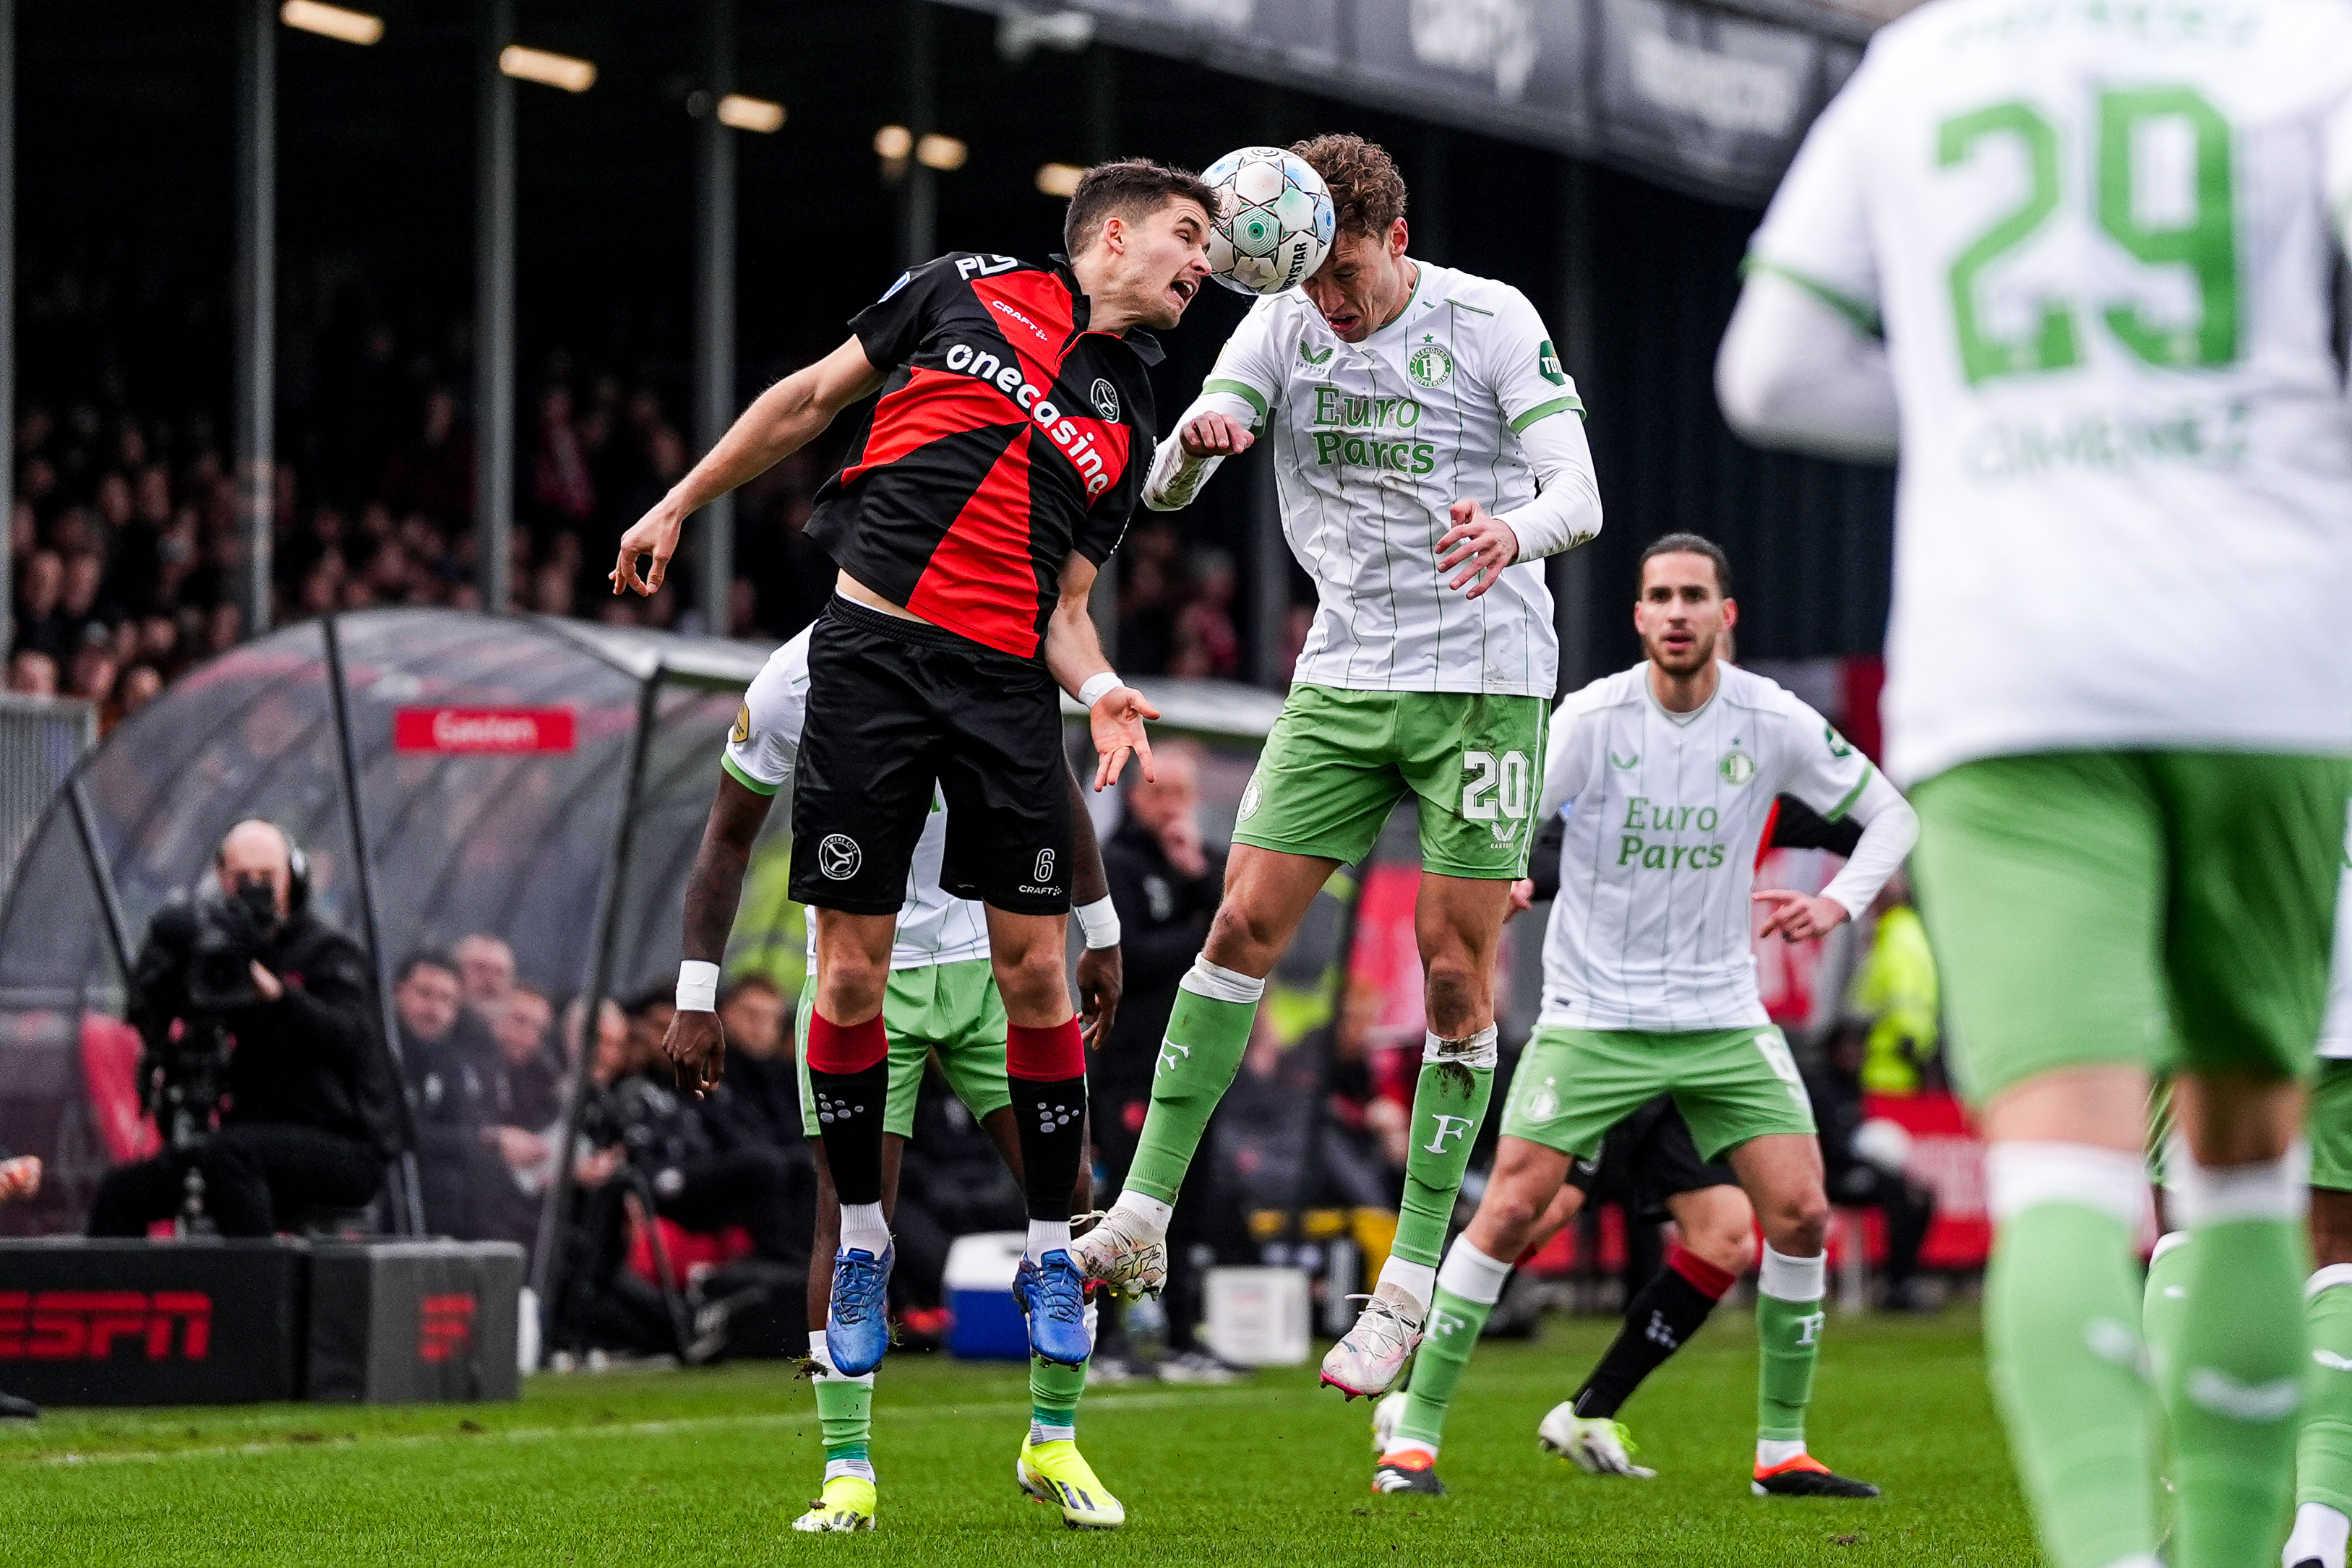 Liveblog • Almere City - Feyenoord • 0-2 [FT]